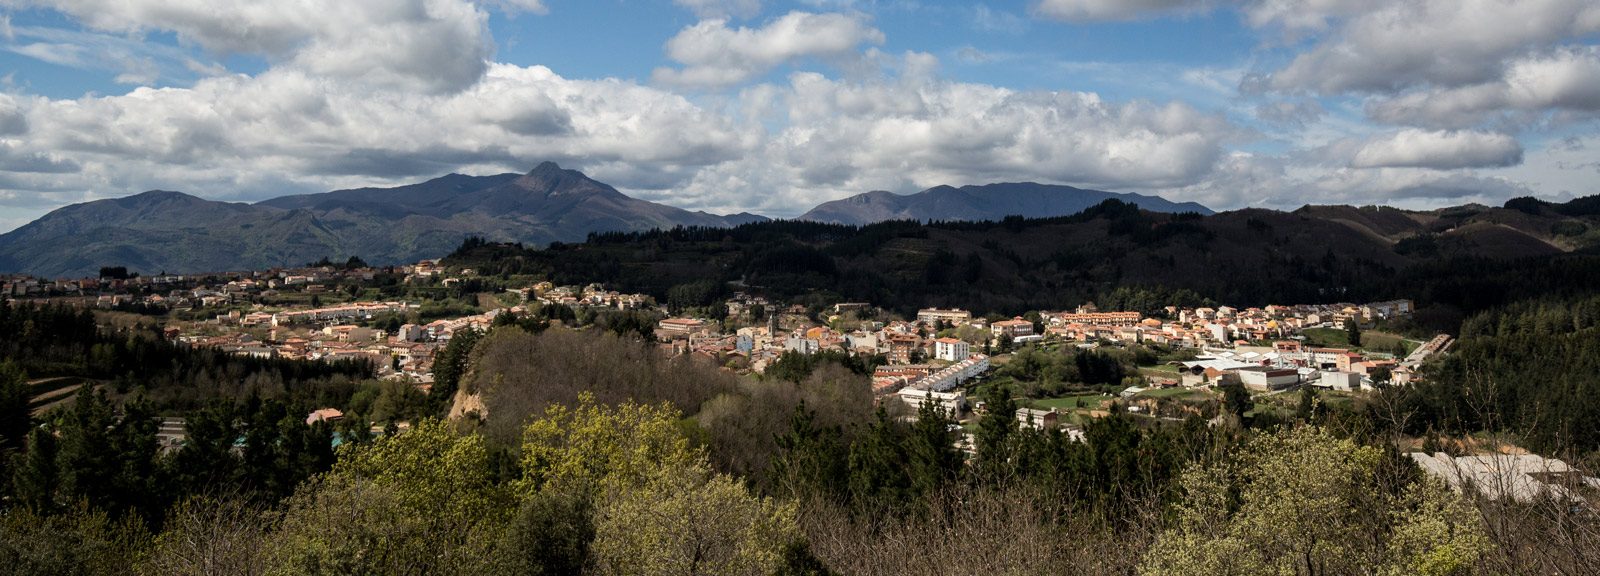 El municipi - Les Guilleries Km0 - Sant Hilari Sacalm